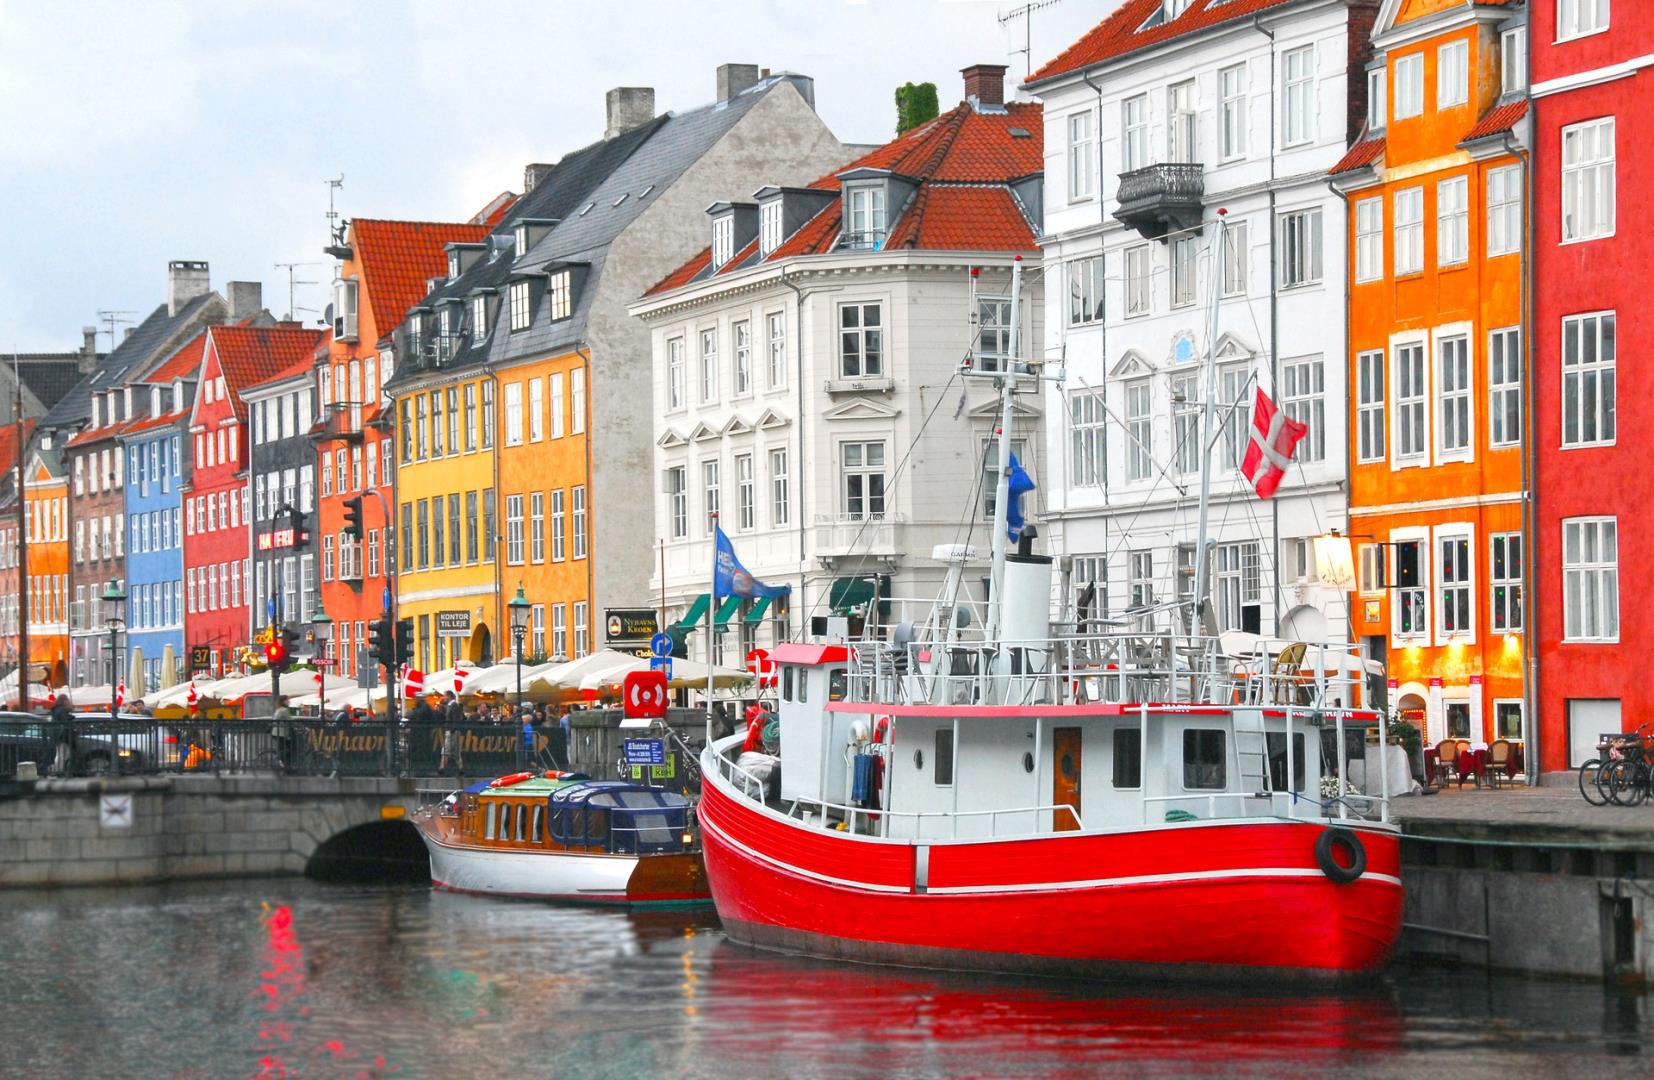 Nyhavn boats and townhomes - Photo Credit: ExplorerBob via Pixabay